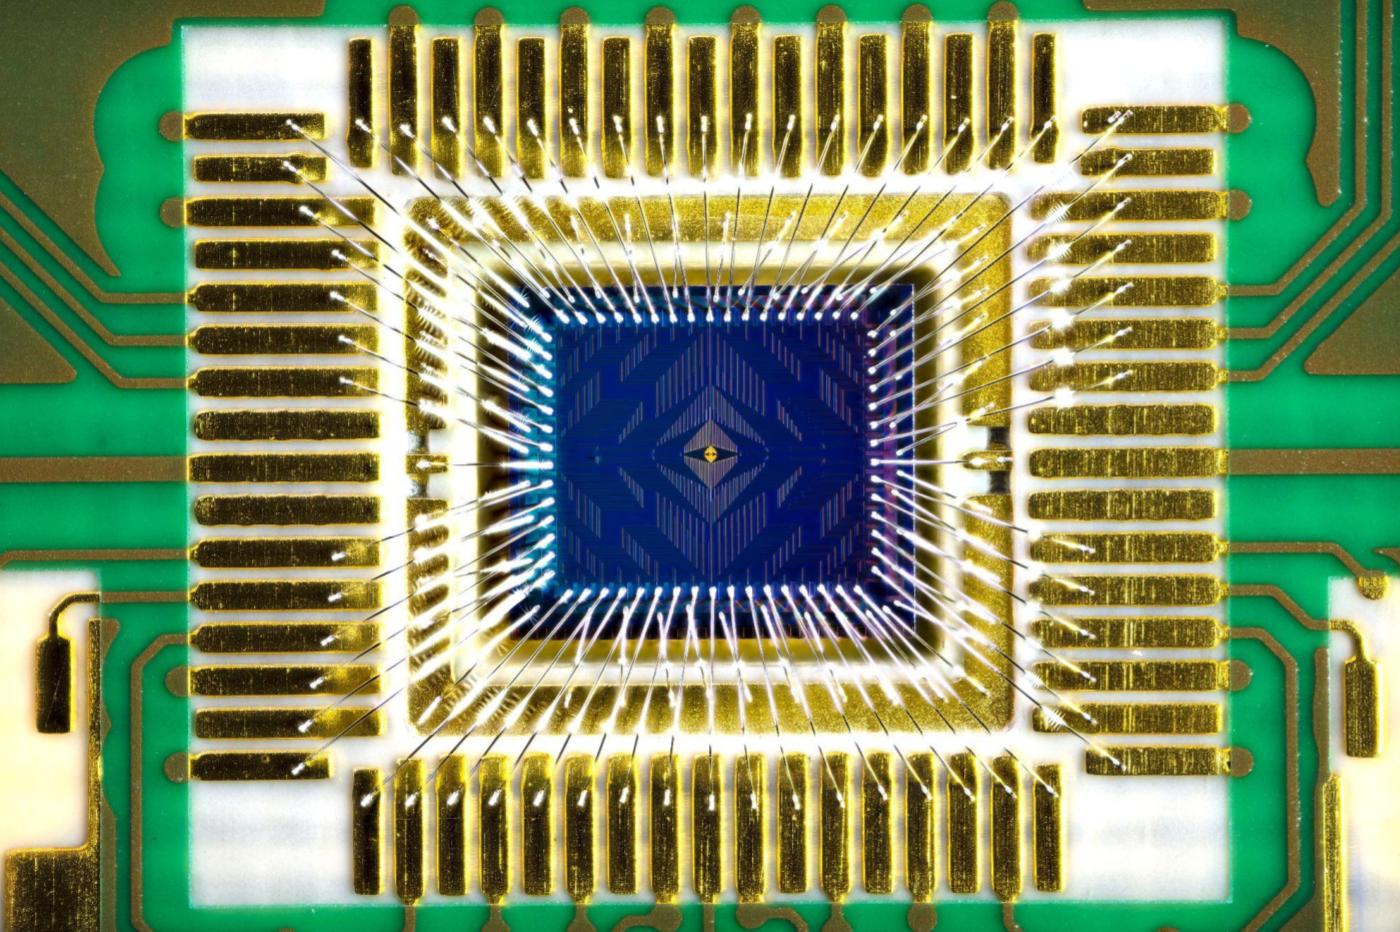 Le packaging de la puce quantique Tunnel Falls d'Intel